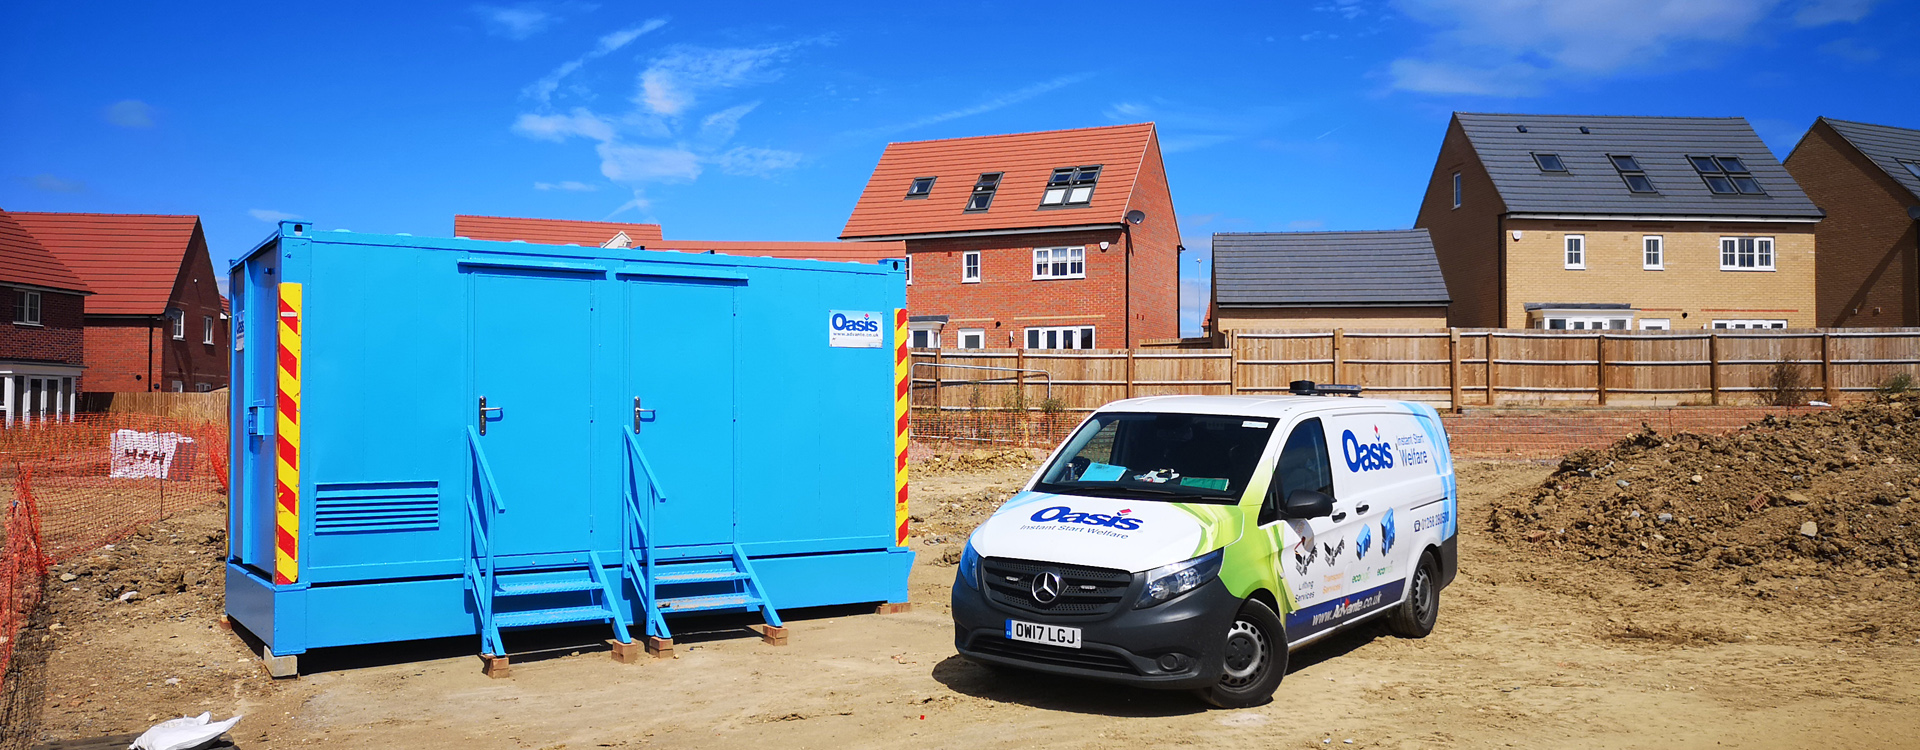 Oasis Vision toilet block on site with van